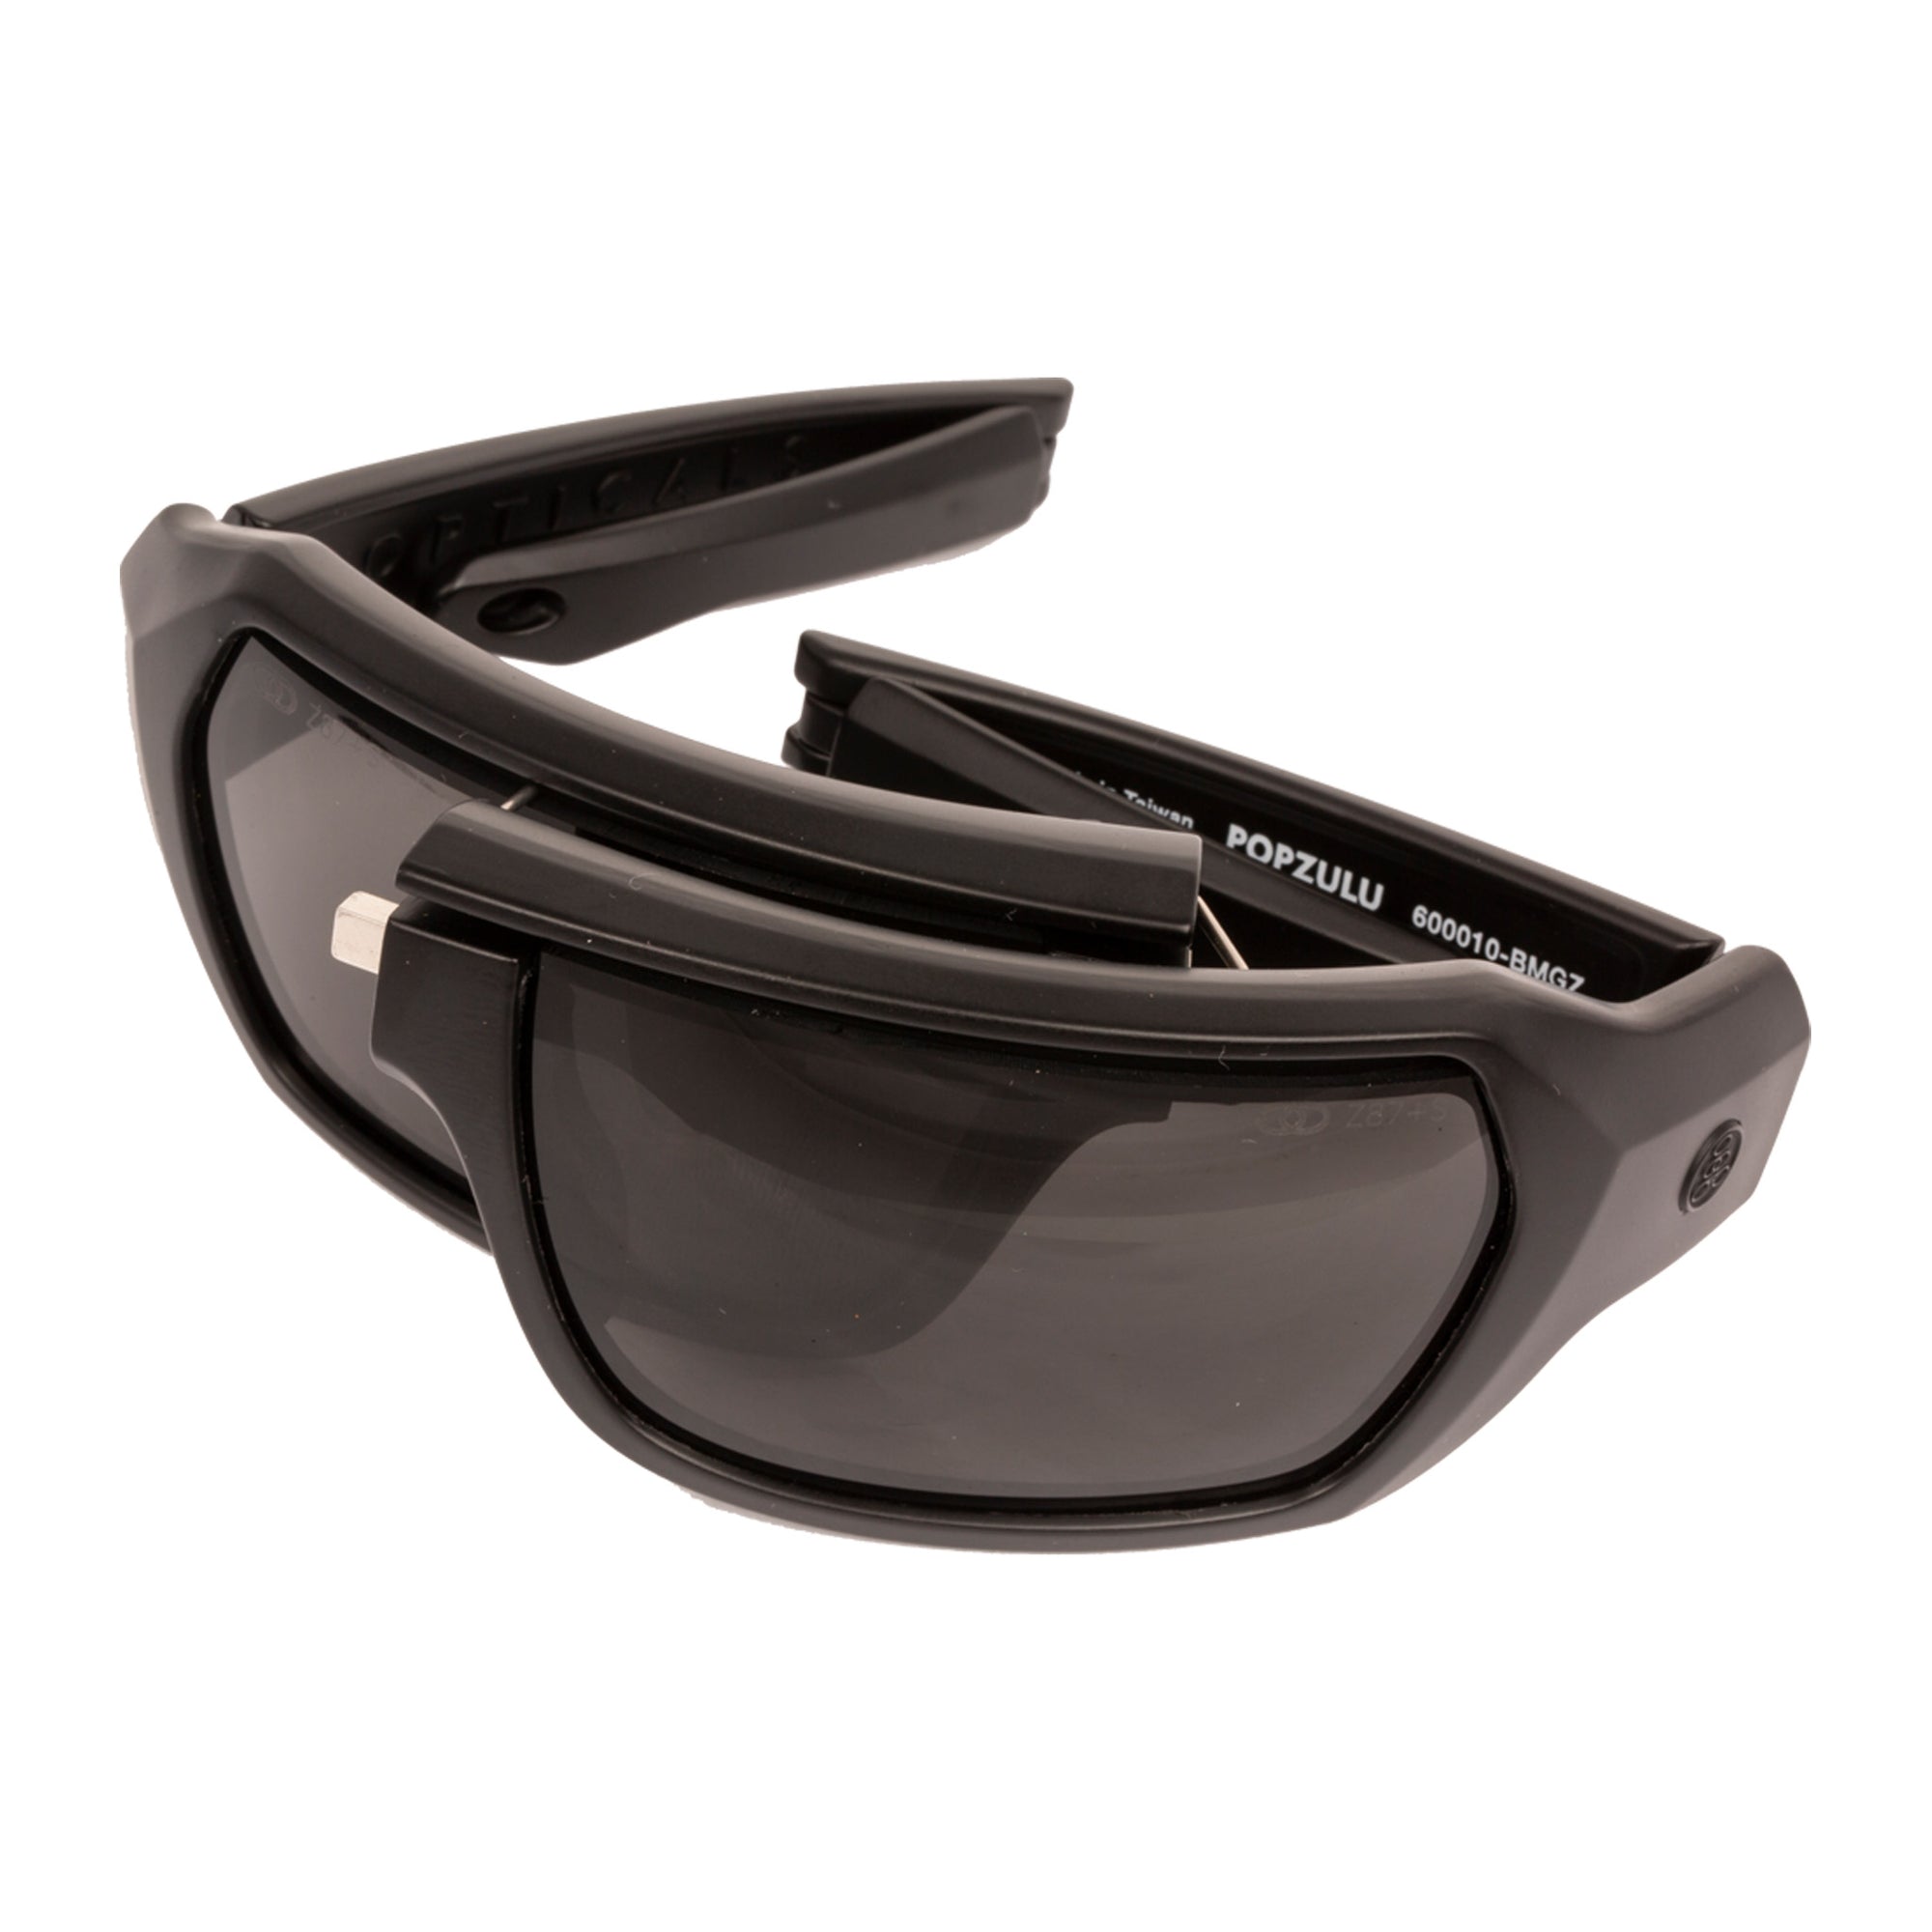 Popticals, Premium Compact Sunglasses, PopZulu, 600010-BMGZ, Standard Sunglasses, Matte Black Frame, Gray Opx Lenses, Spider View